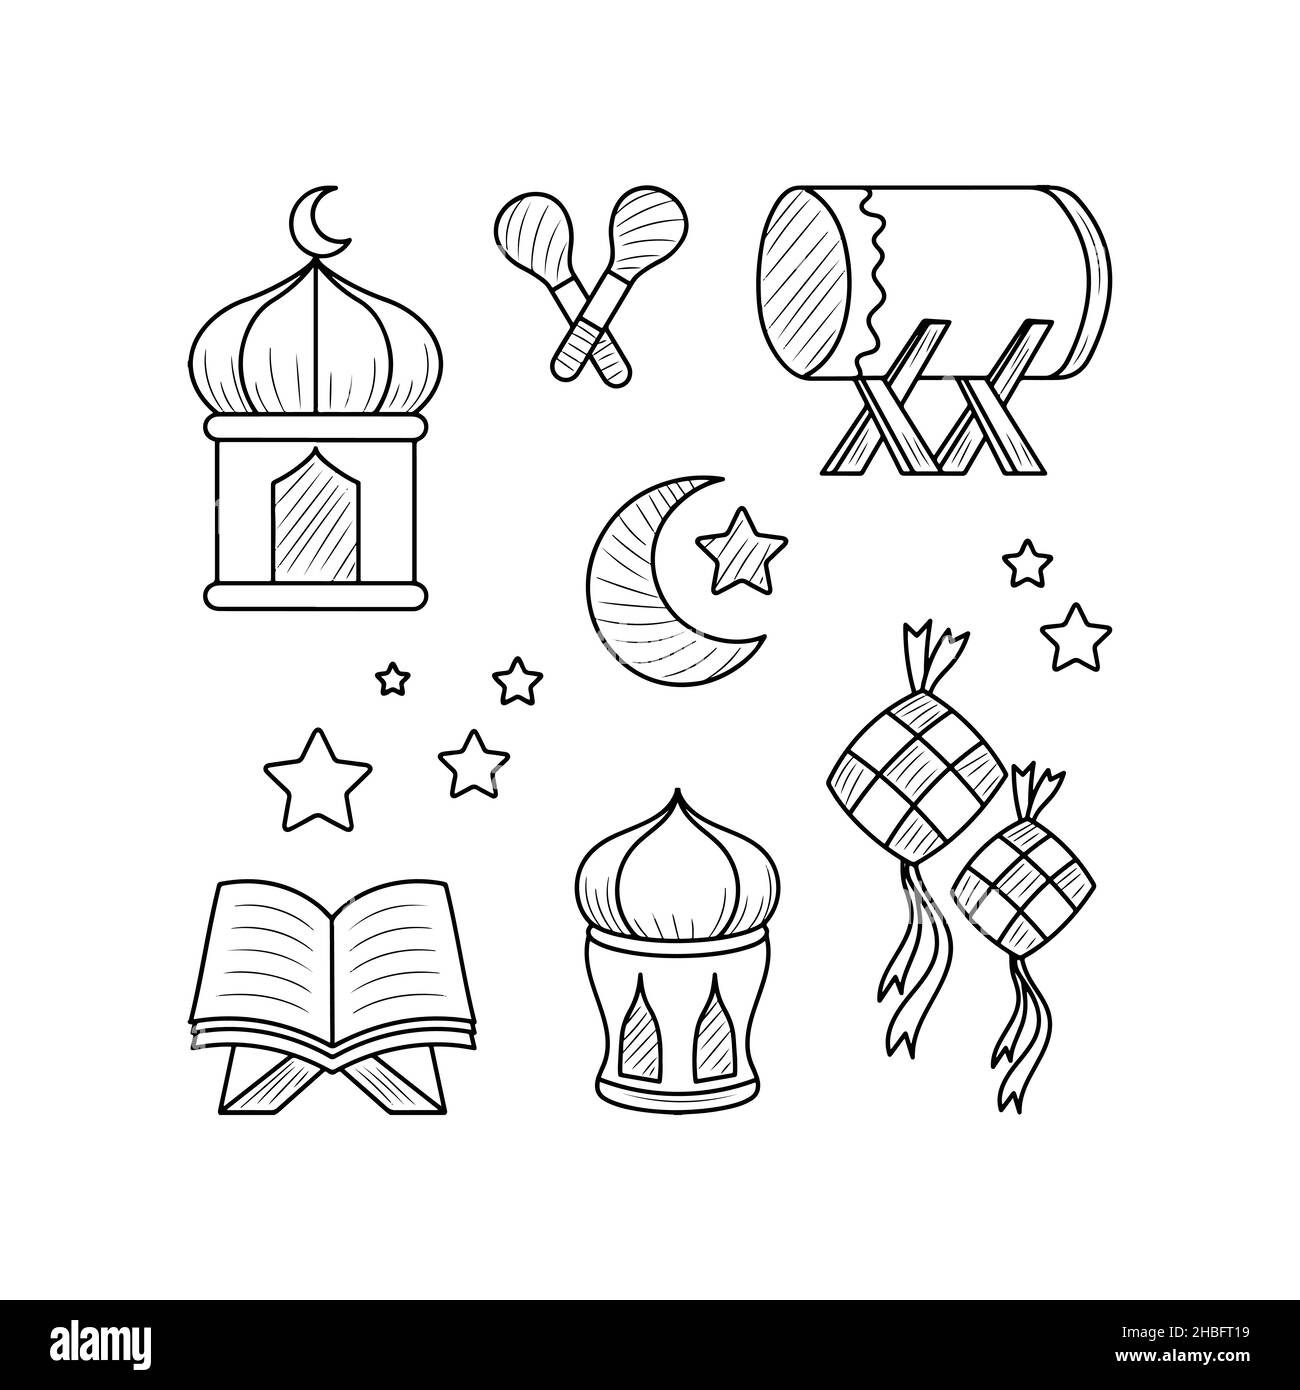 Religiöse Sammlung Ramadan Kareem. Accessoire für Happy Day Ramadan Kareem mit handgezeichneter Doodle-Optik Stock Vektor